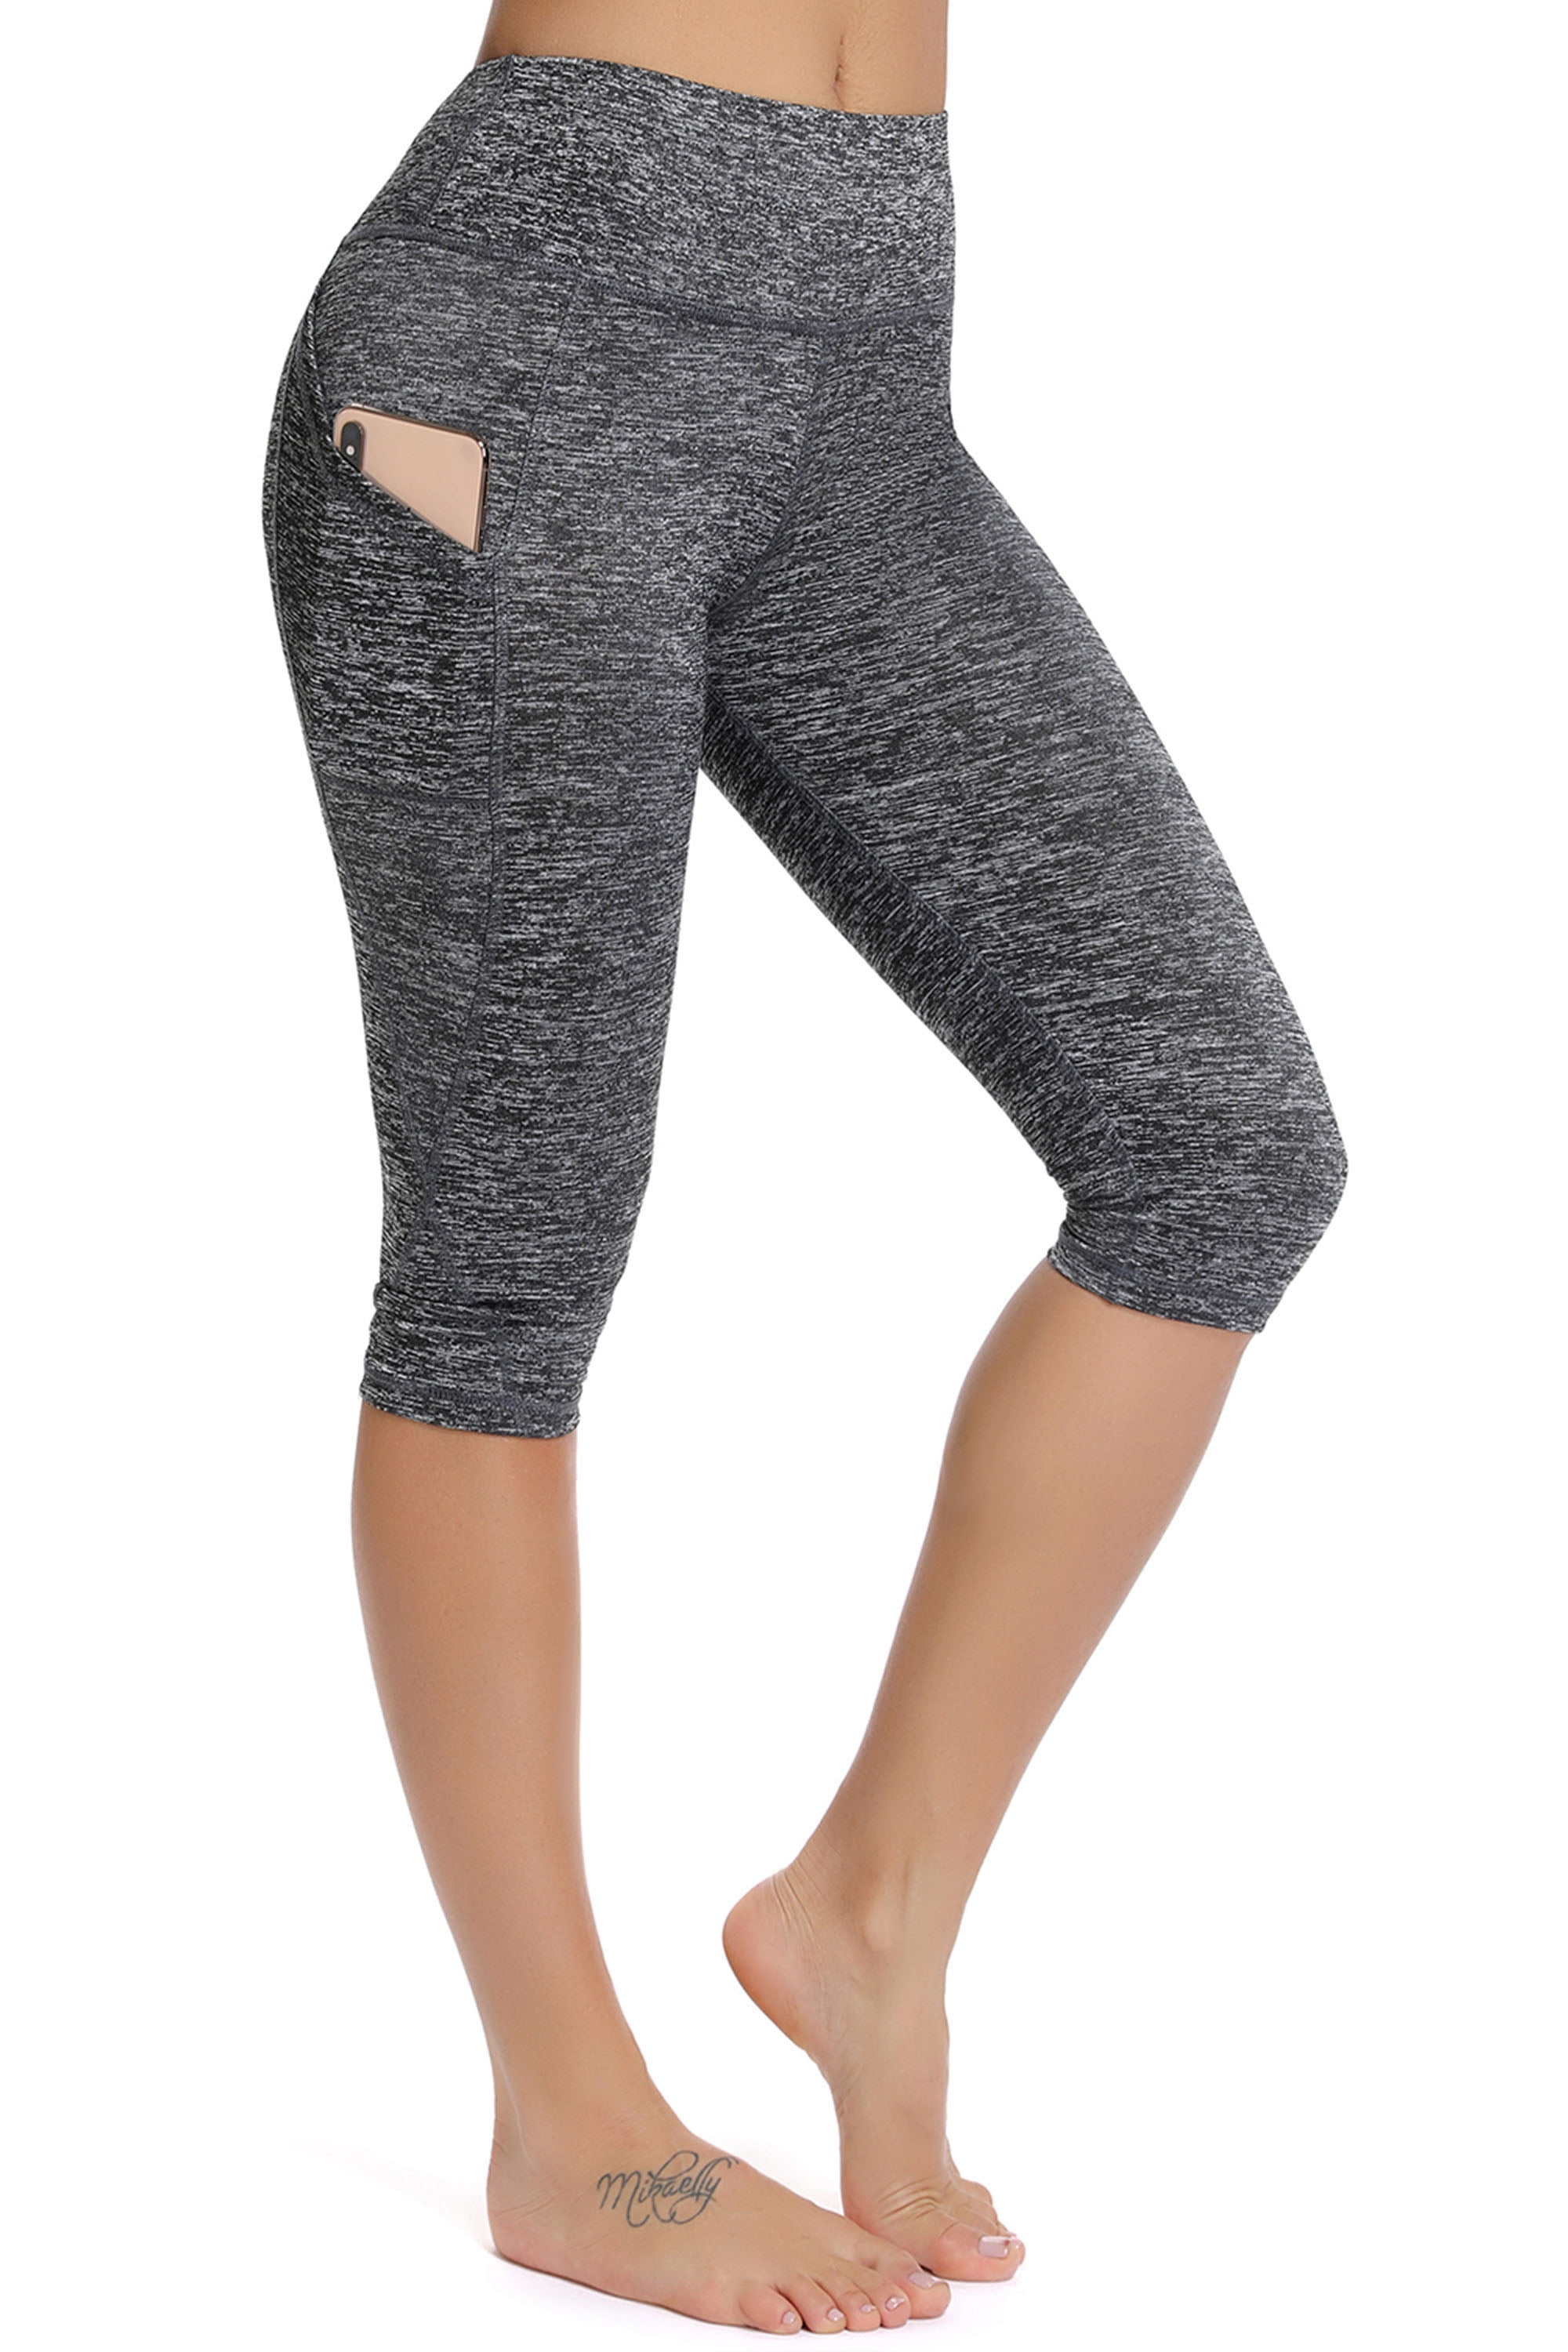 GAYHAY High Waist Yoga Pants with Pockets for Women Tummy Control Workout Running 4 Way Stretch Capri Yoga Leggings 